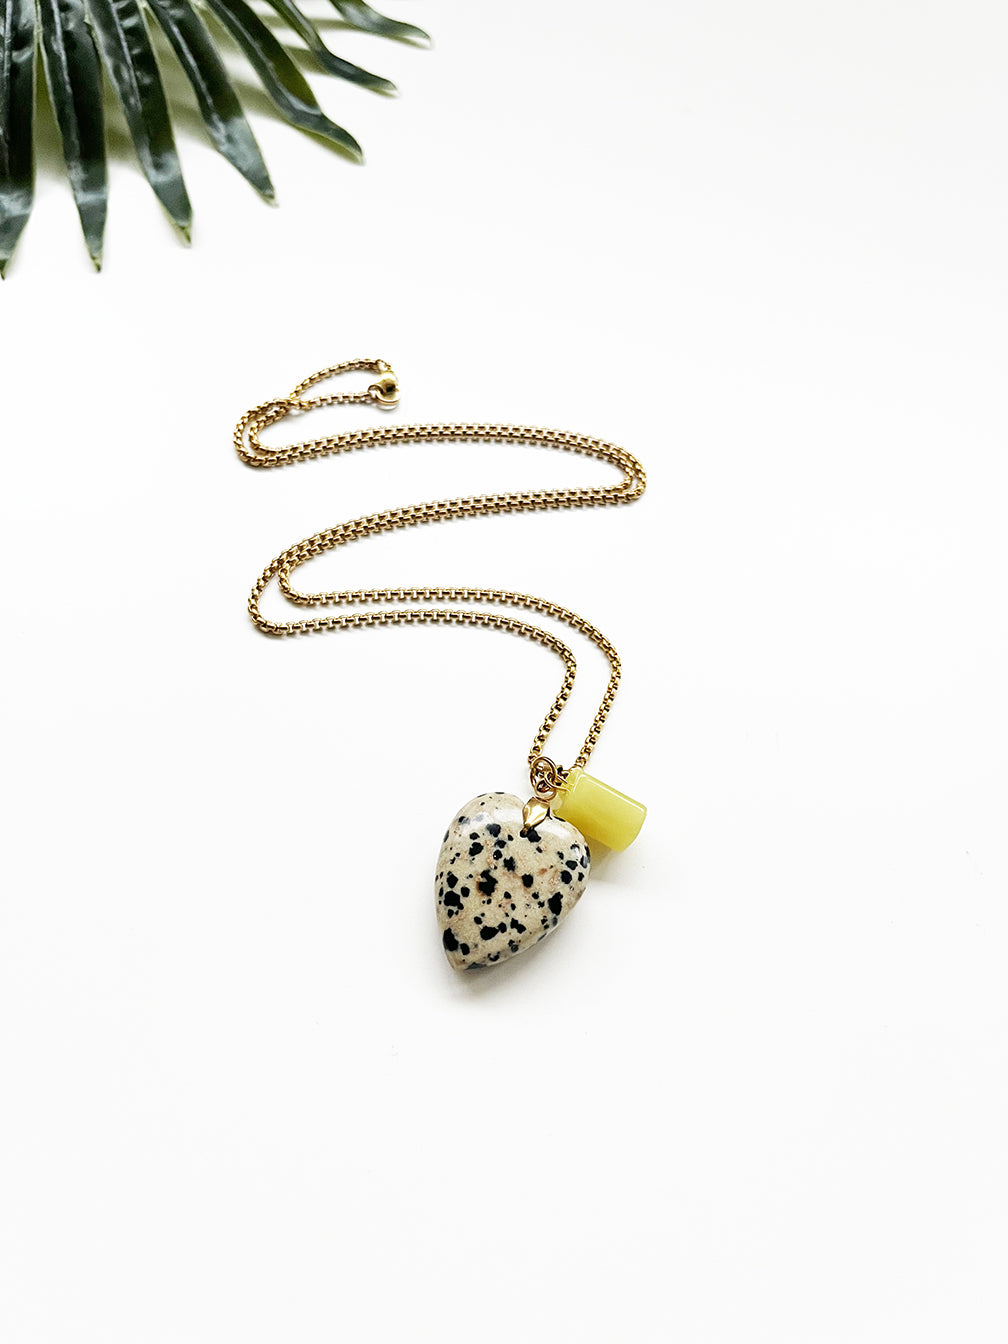 touchstone necklace - dalmatian jasper and lemon jade